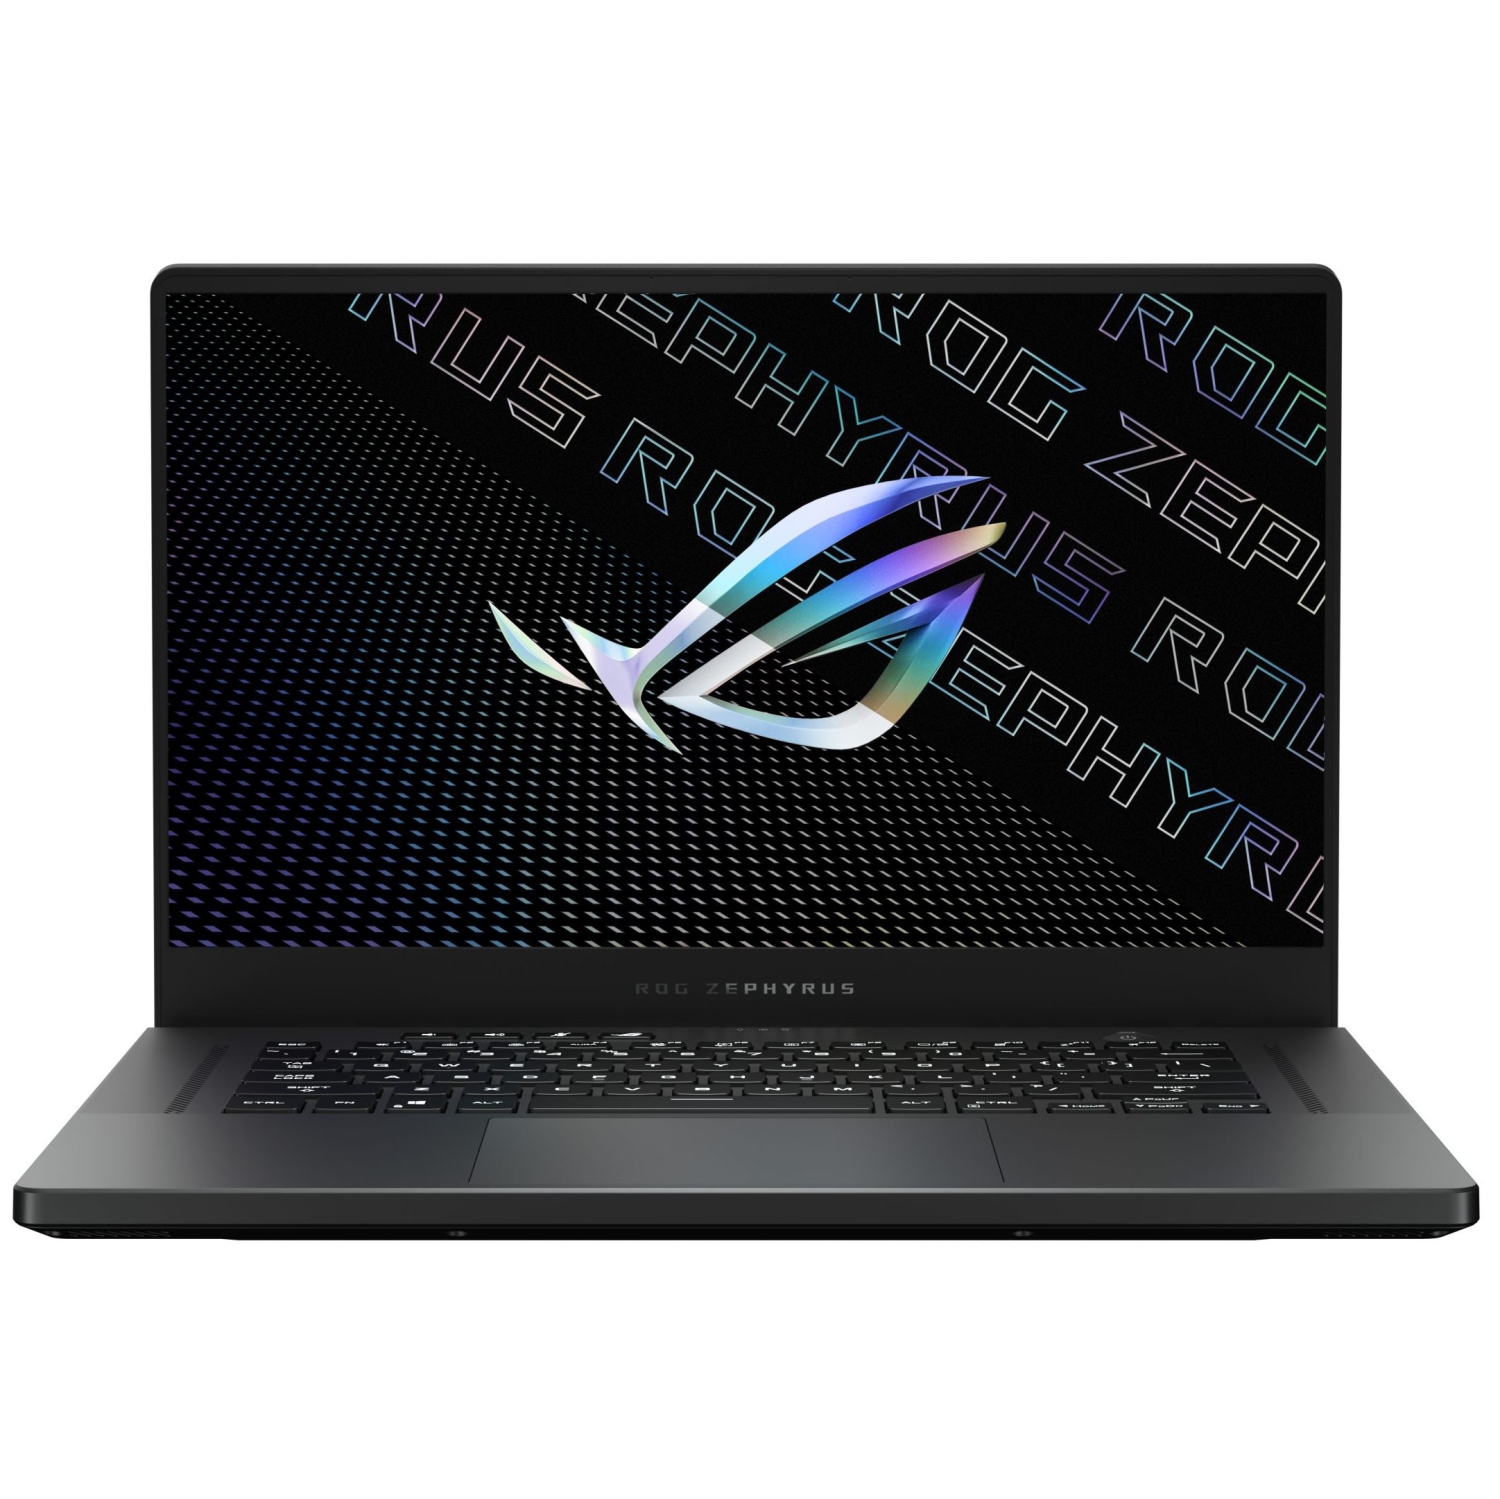 Custom ASUS ROG Zephyrus G15 Laptop (AMD Ryzen 9 5900HS, 40GB RAM, 1TB PCIe SSD, NVIDIA RTX 3070, Win 10 Pro)